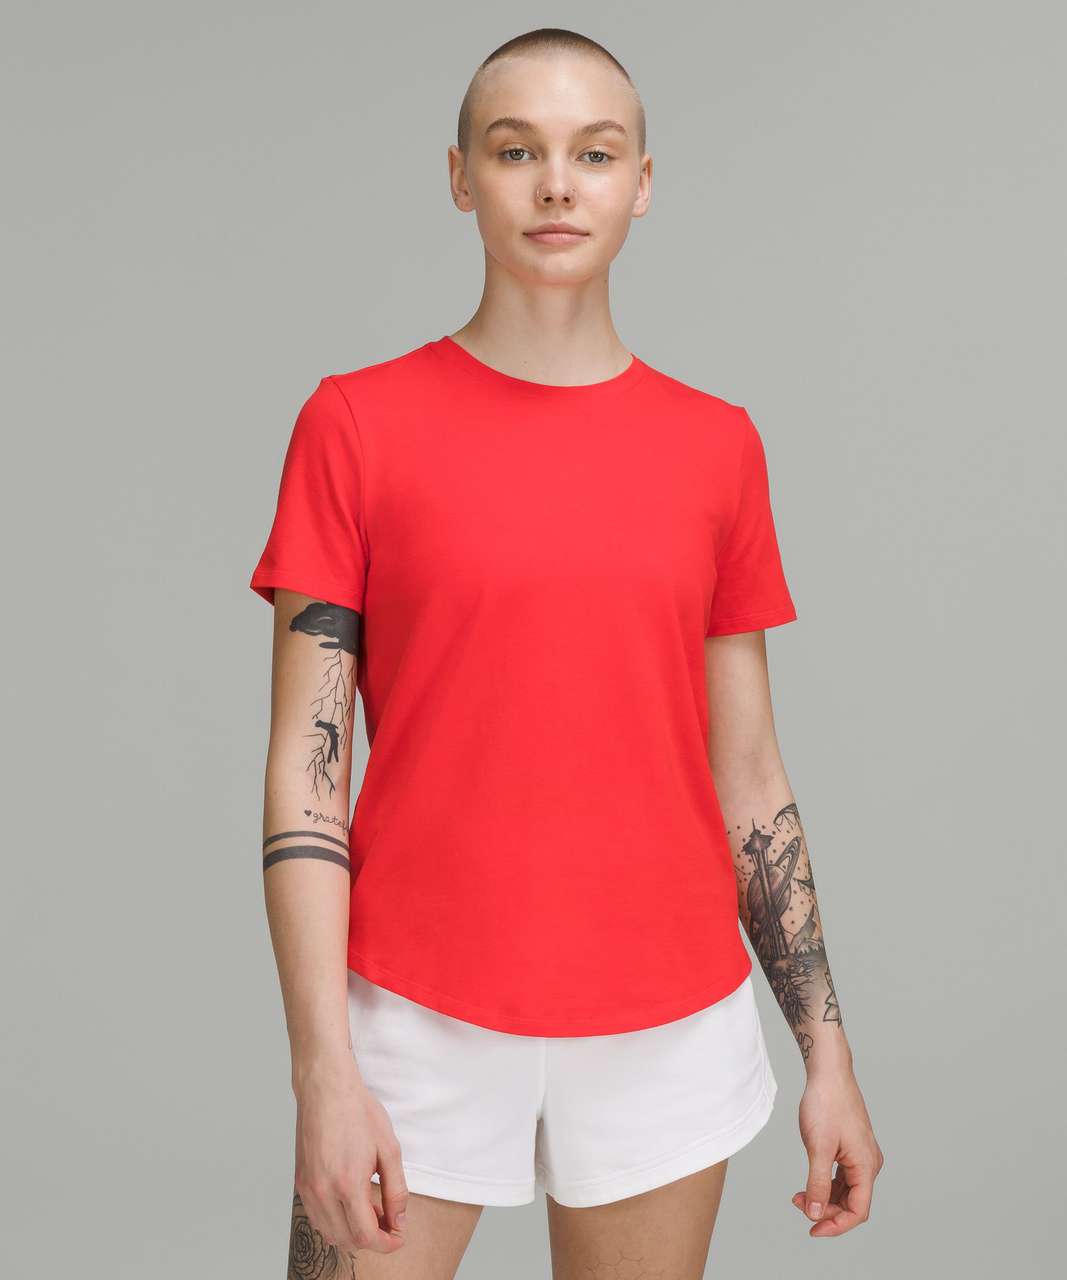 Lululemon Cates T-Shirt Size 4? Love Red Cropped Crewneck Pima Cotton